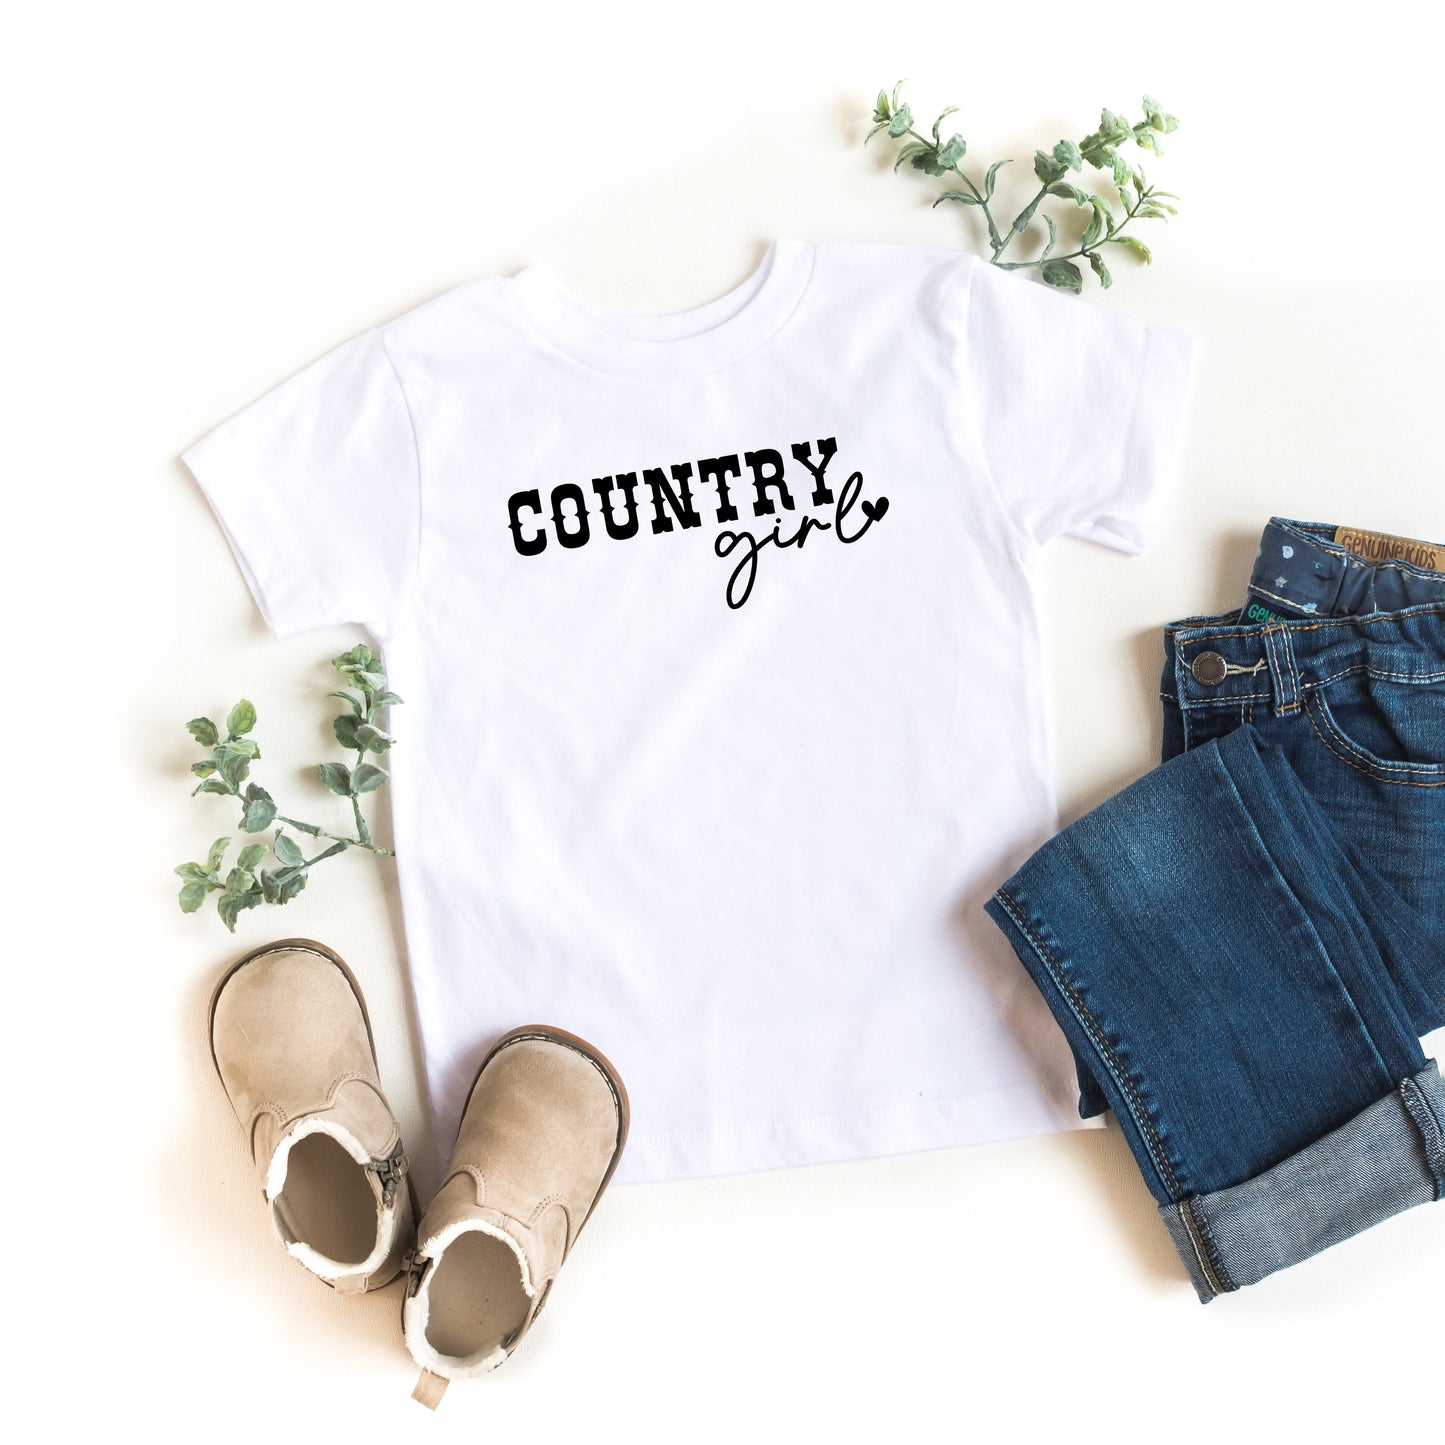 Country Girl Heart | Toddler Short Sleeve Crew Neck